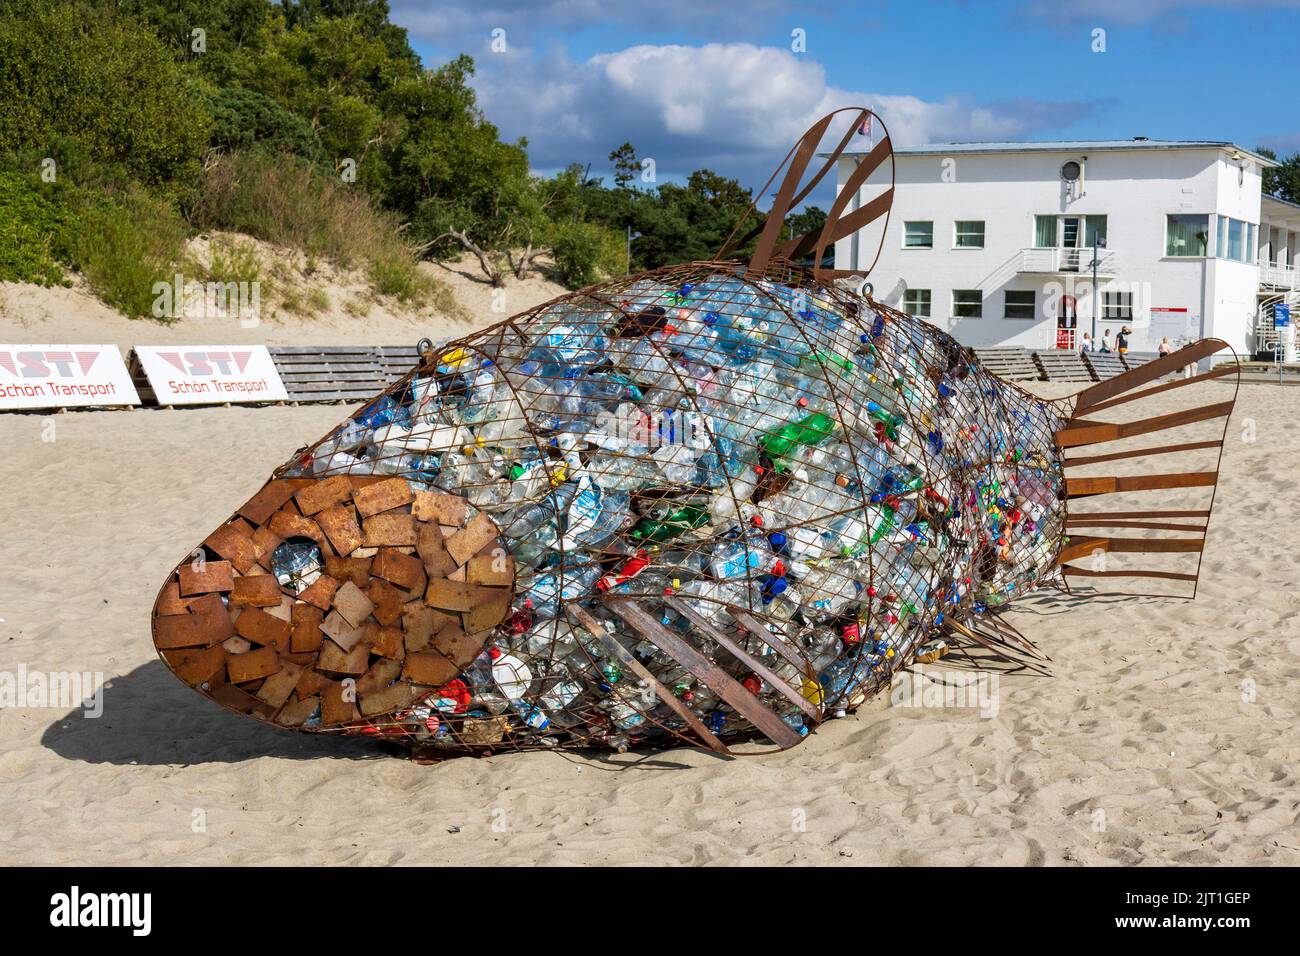 Sculpure of a fish filled with plastic bottles depicting plastic pollution of the sea, seaside resort of Pärnu, Estonia The Baltics, Europe Stock Photo